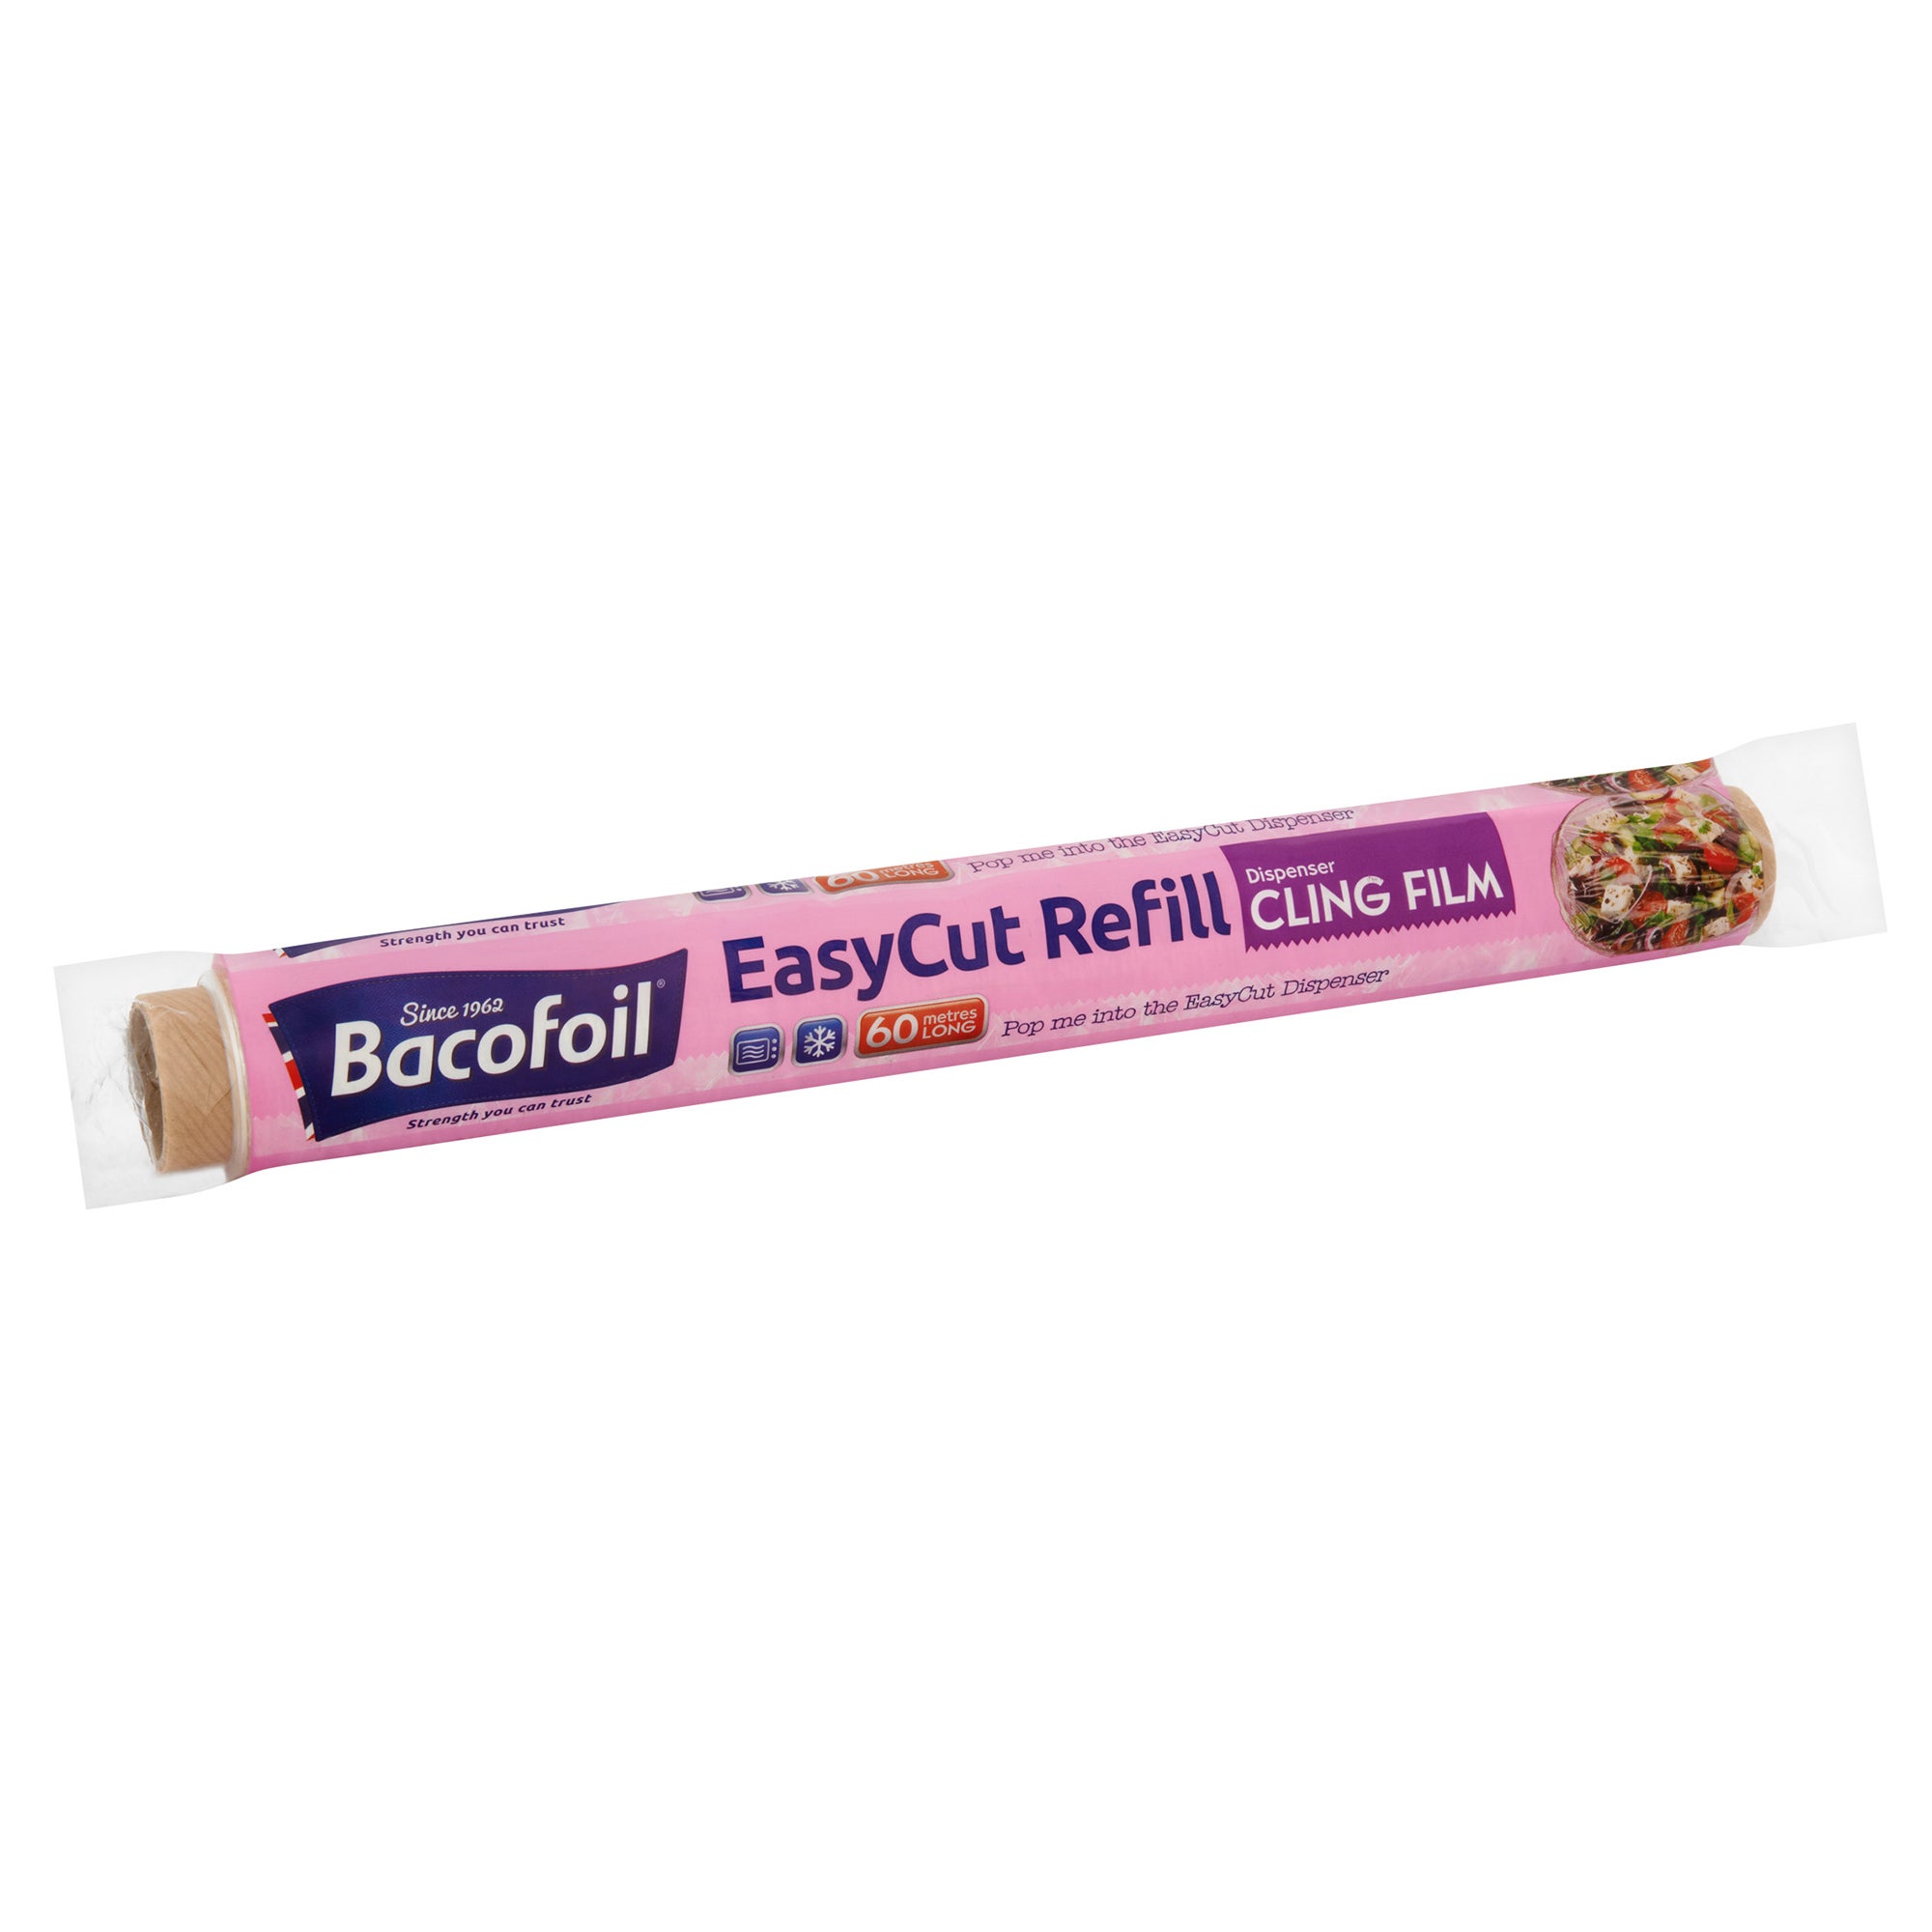 Bacofoil Easycut Film Refill Roll